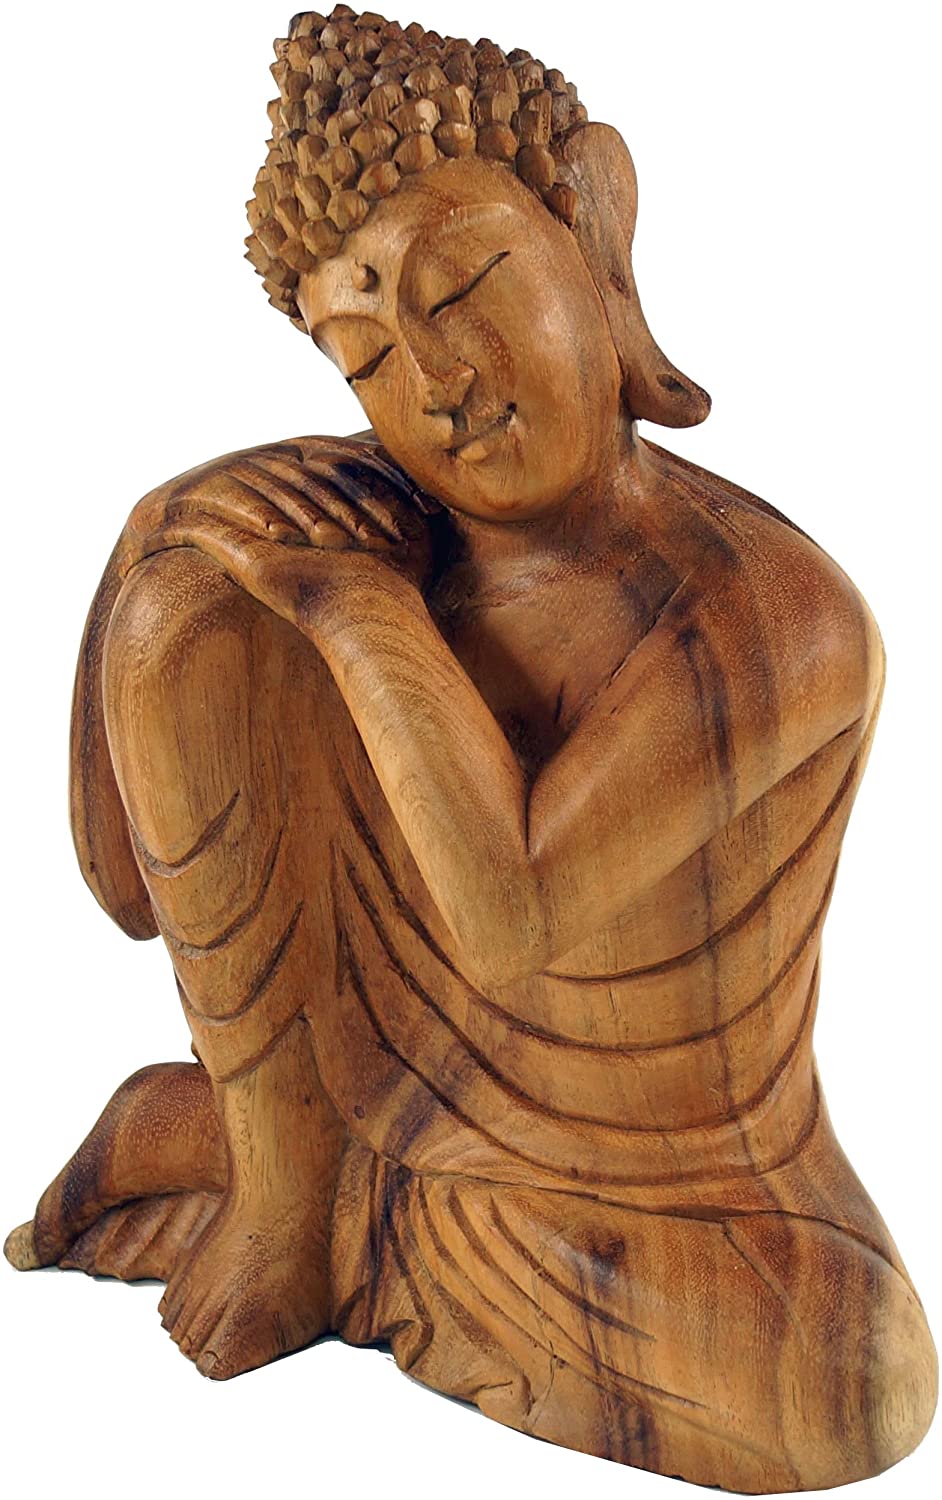 GURU SHOP Sitting Buddha Wooden Buddha Statue Handmade 30 cm Design 13 Brown Buddha